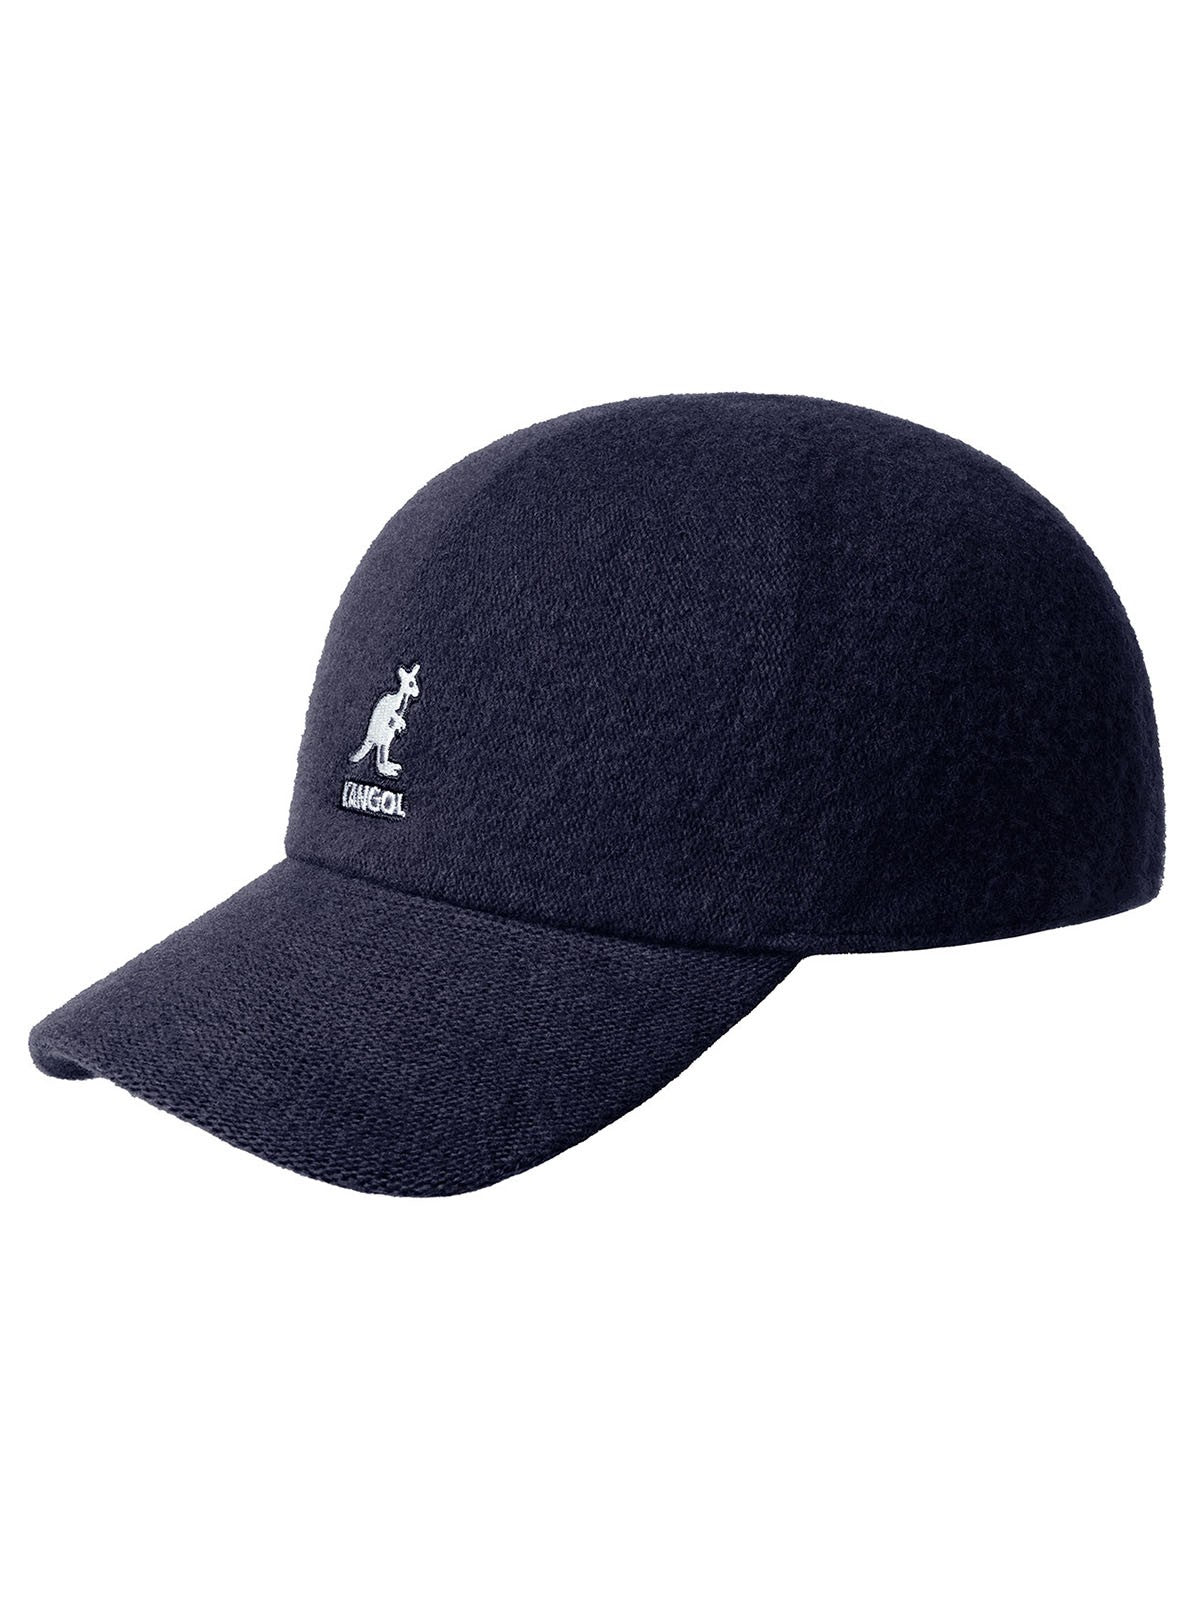 Cappellini da baseball Unisex Kangol - Wool Spacecap - Blu